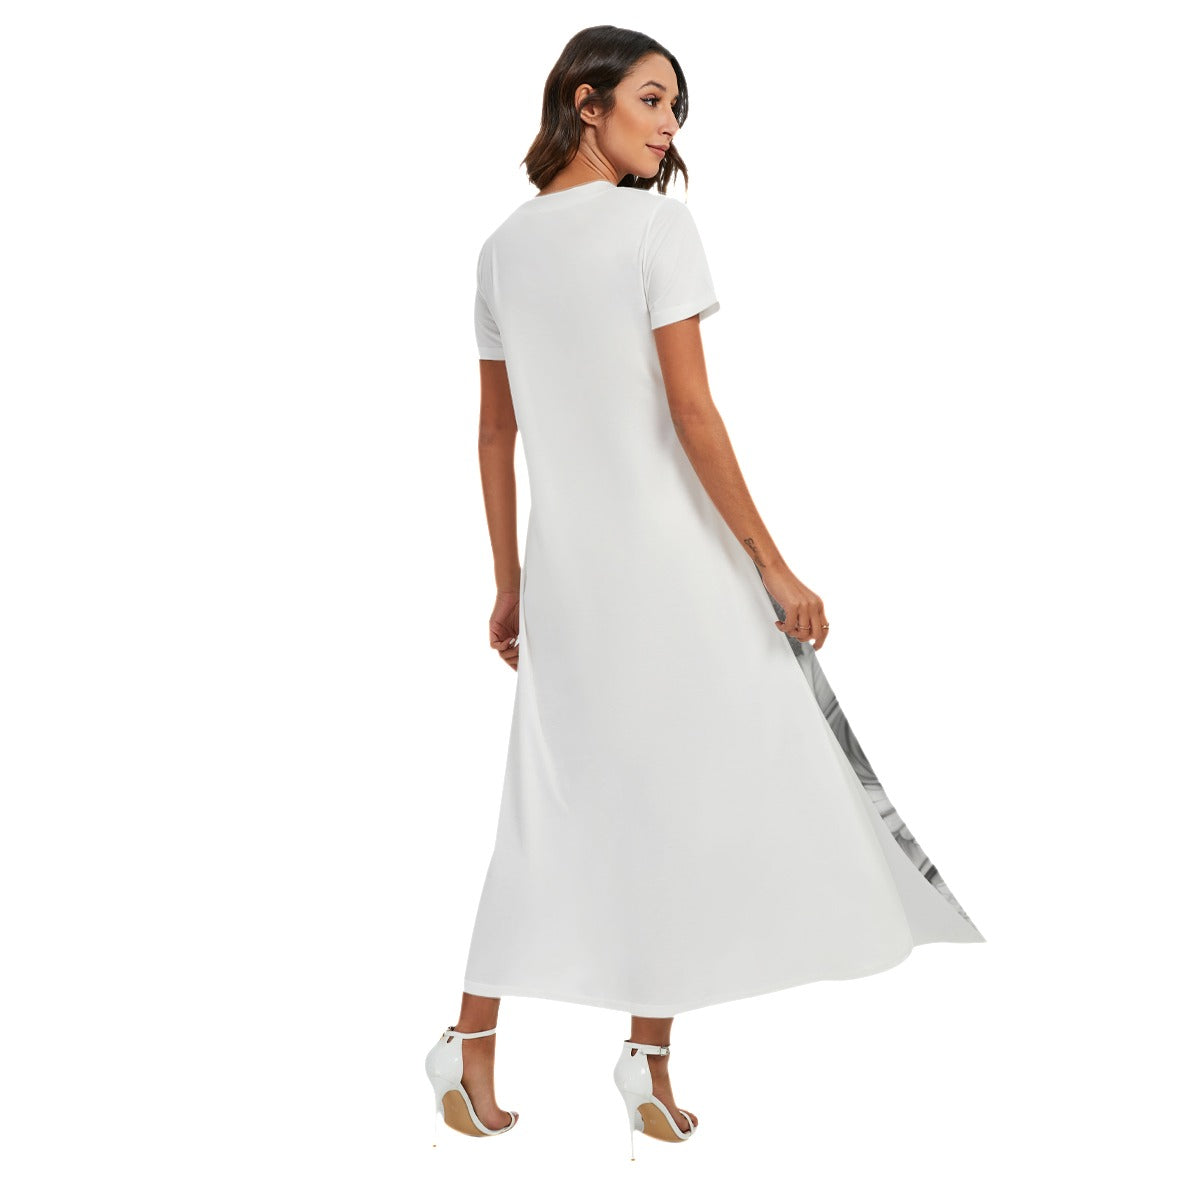 All-Over Print Women's V-neck Dress With Side Slit